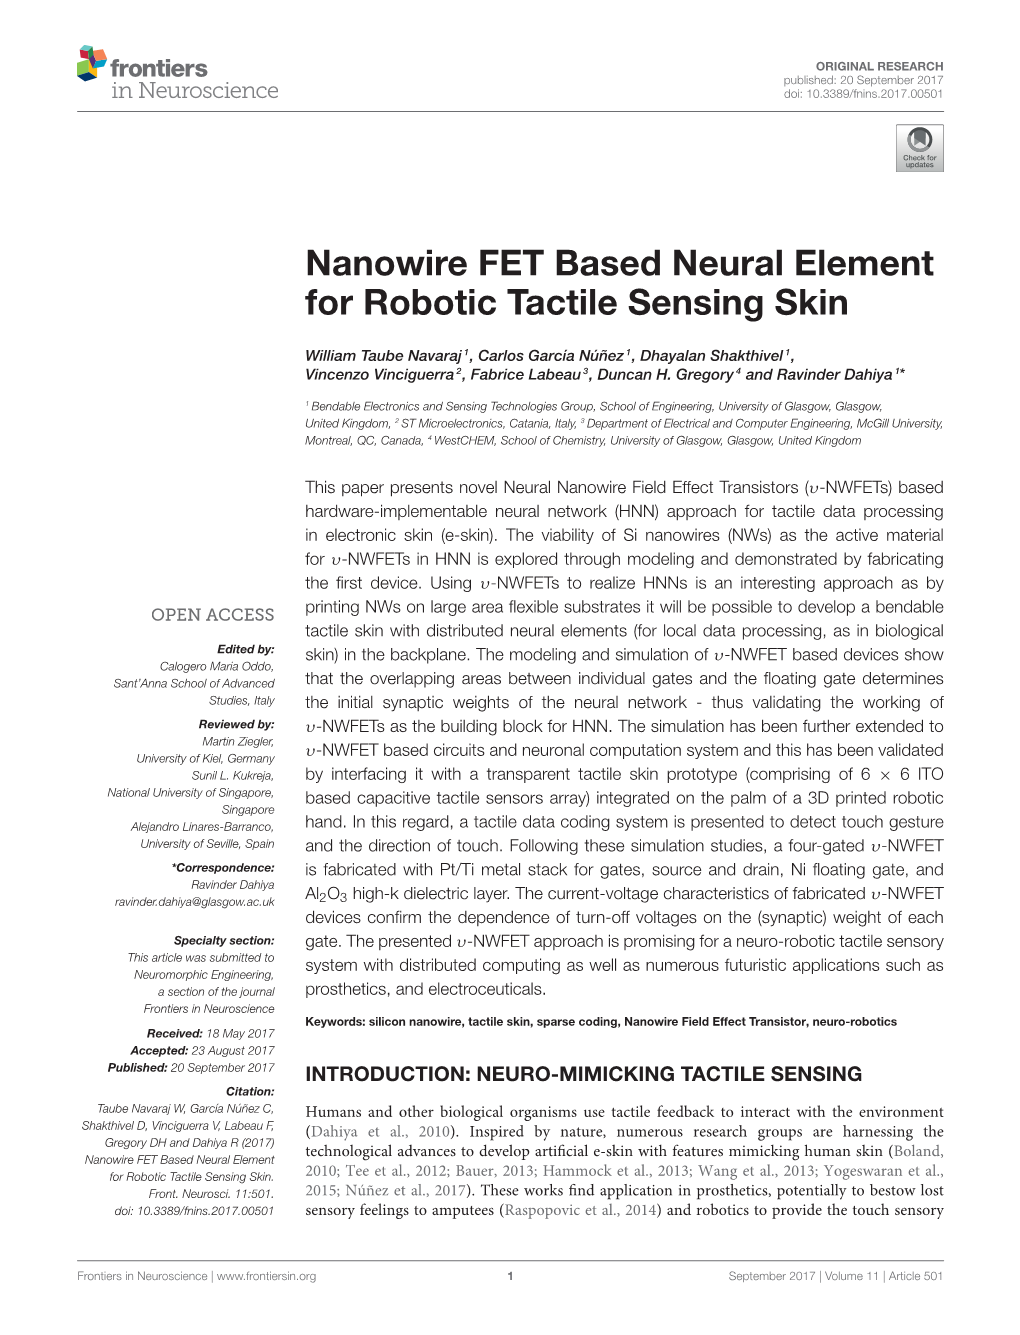 Nanowire FET Based Neural Element for Robotic Tactile Sensing Skin